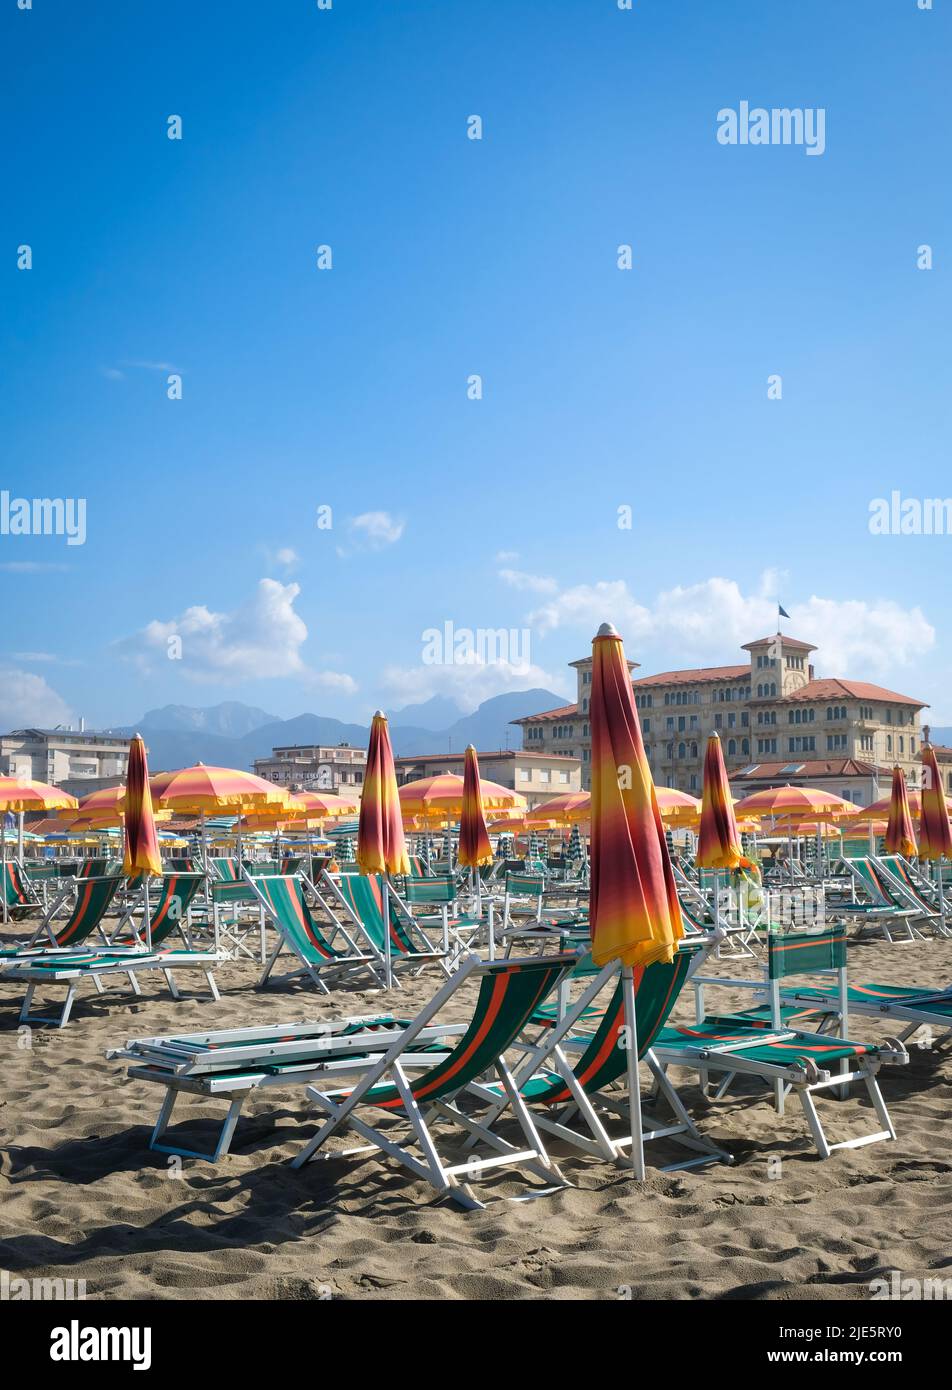 Colorful beach umbrellas and class ic architecture of Viareggio, Italy with negative space for copy. Stock Photo